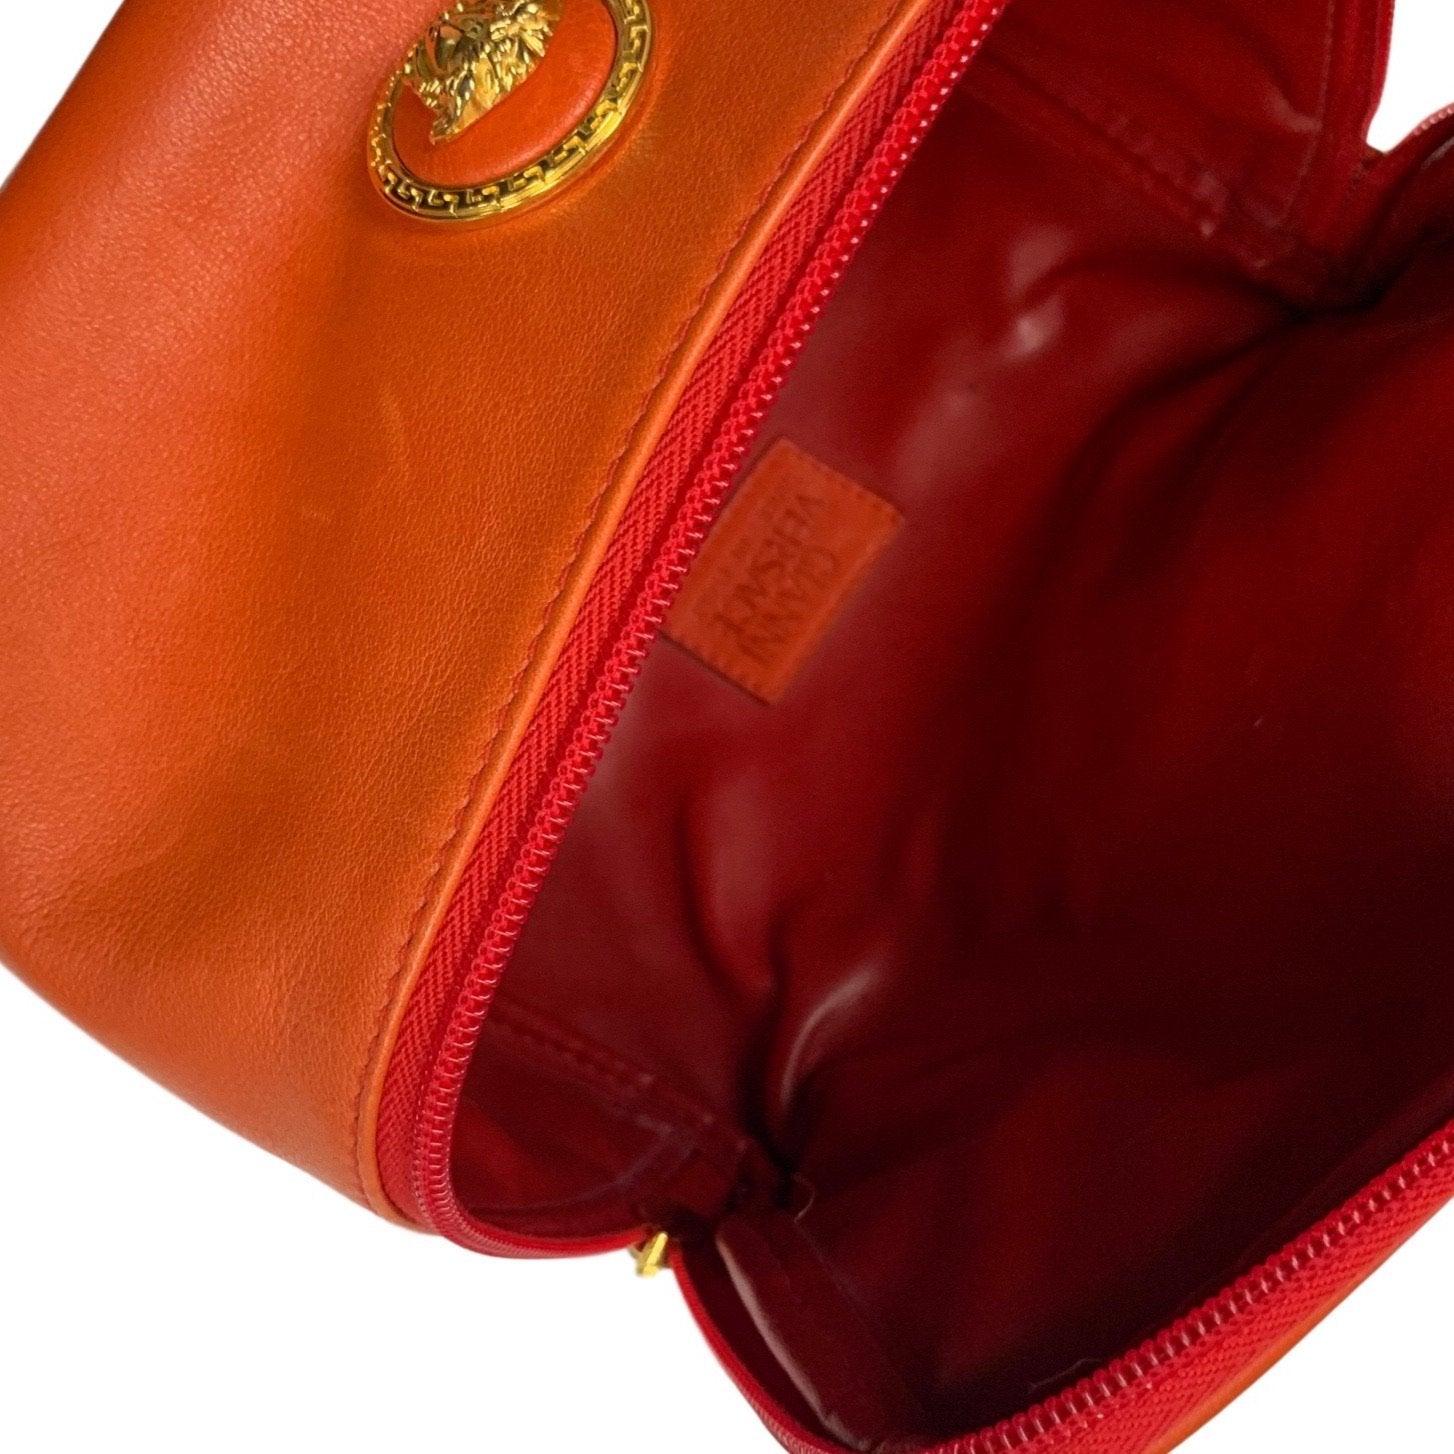 Versace Orange Leather Logo Vanity Bag - Handbags